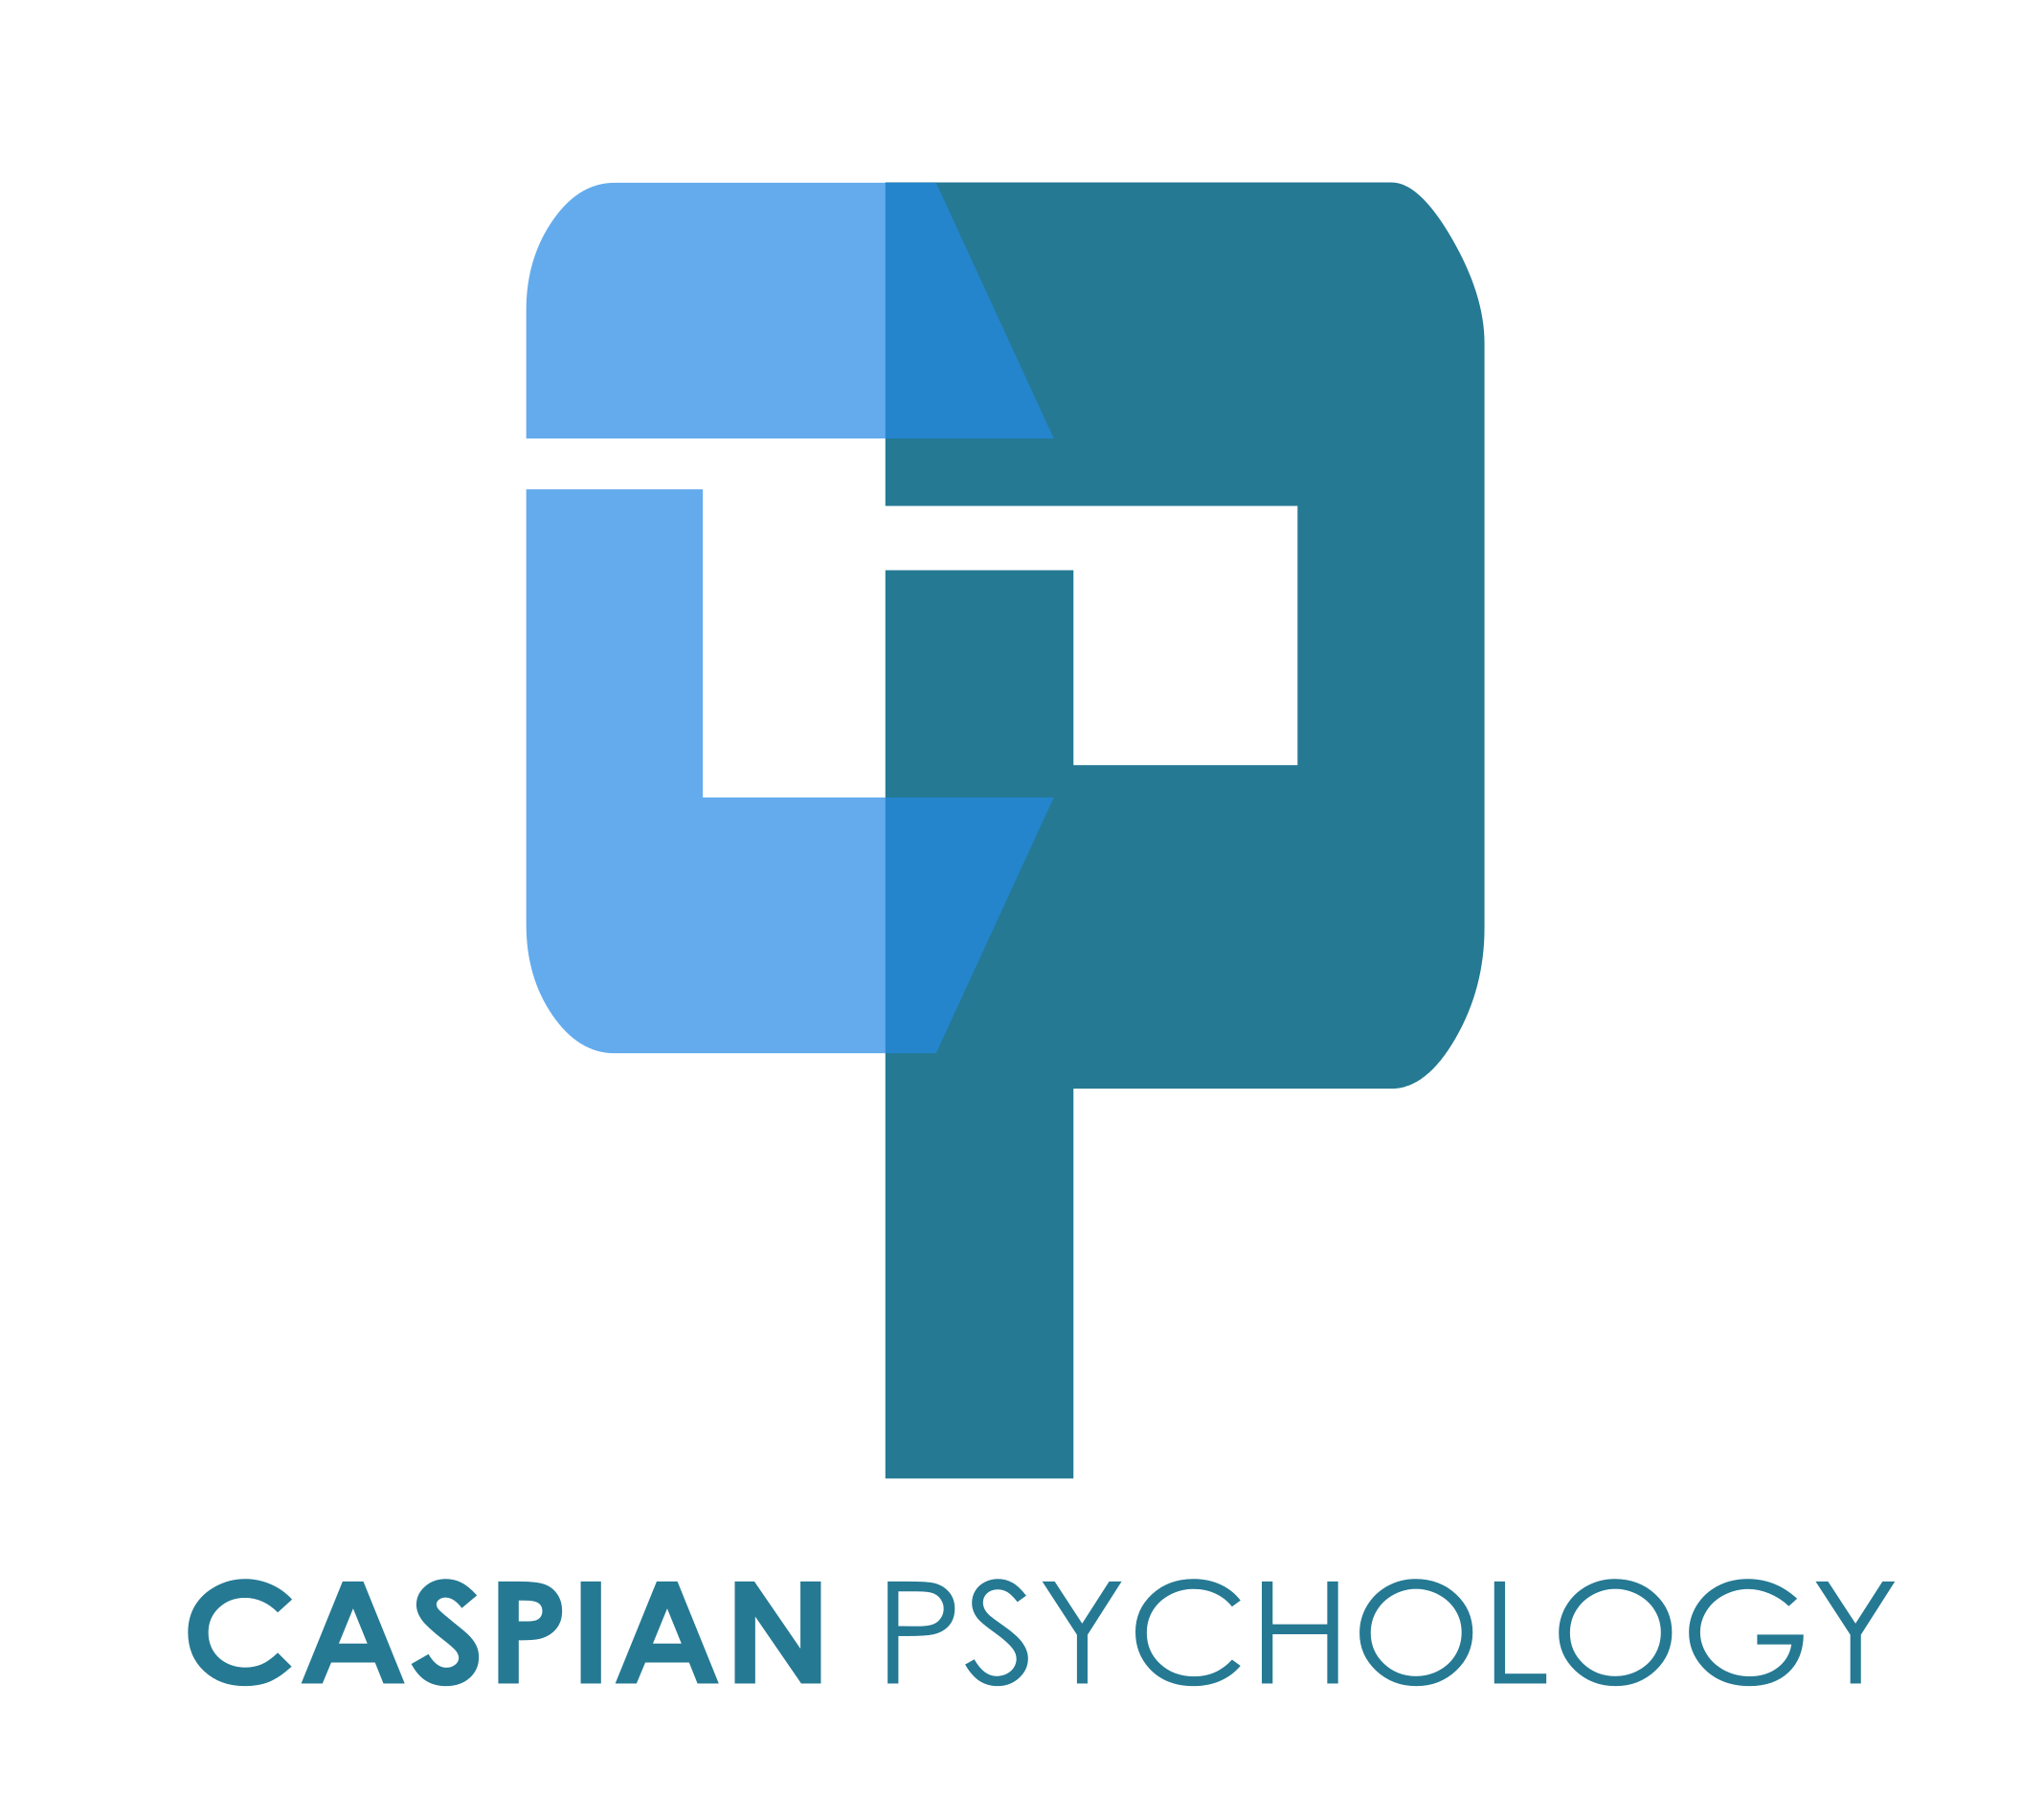 Caspian Pyschology